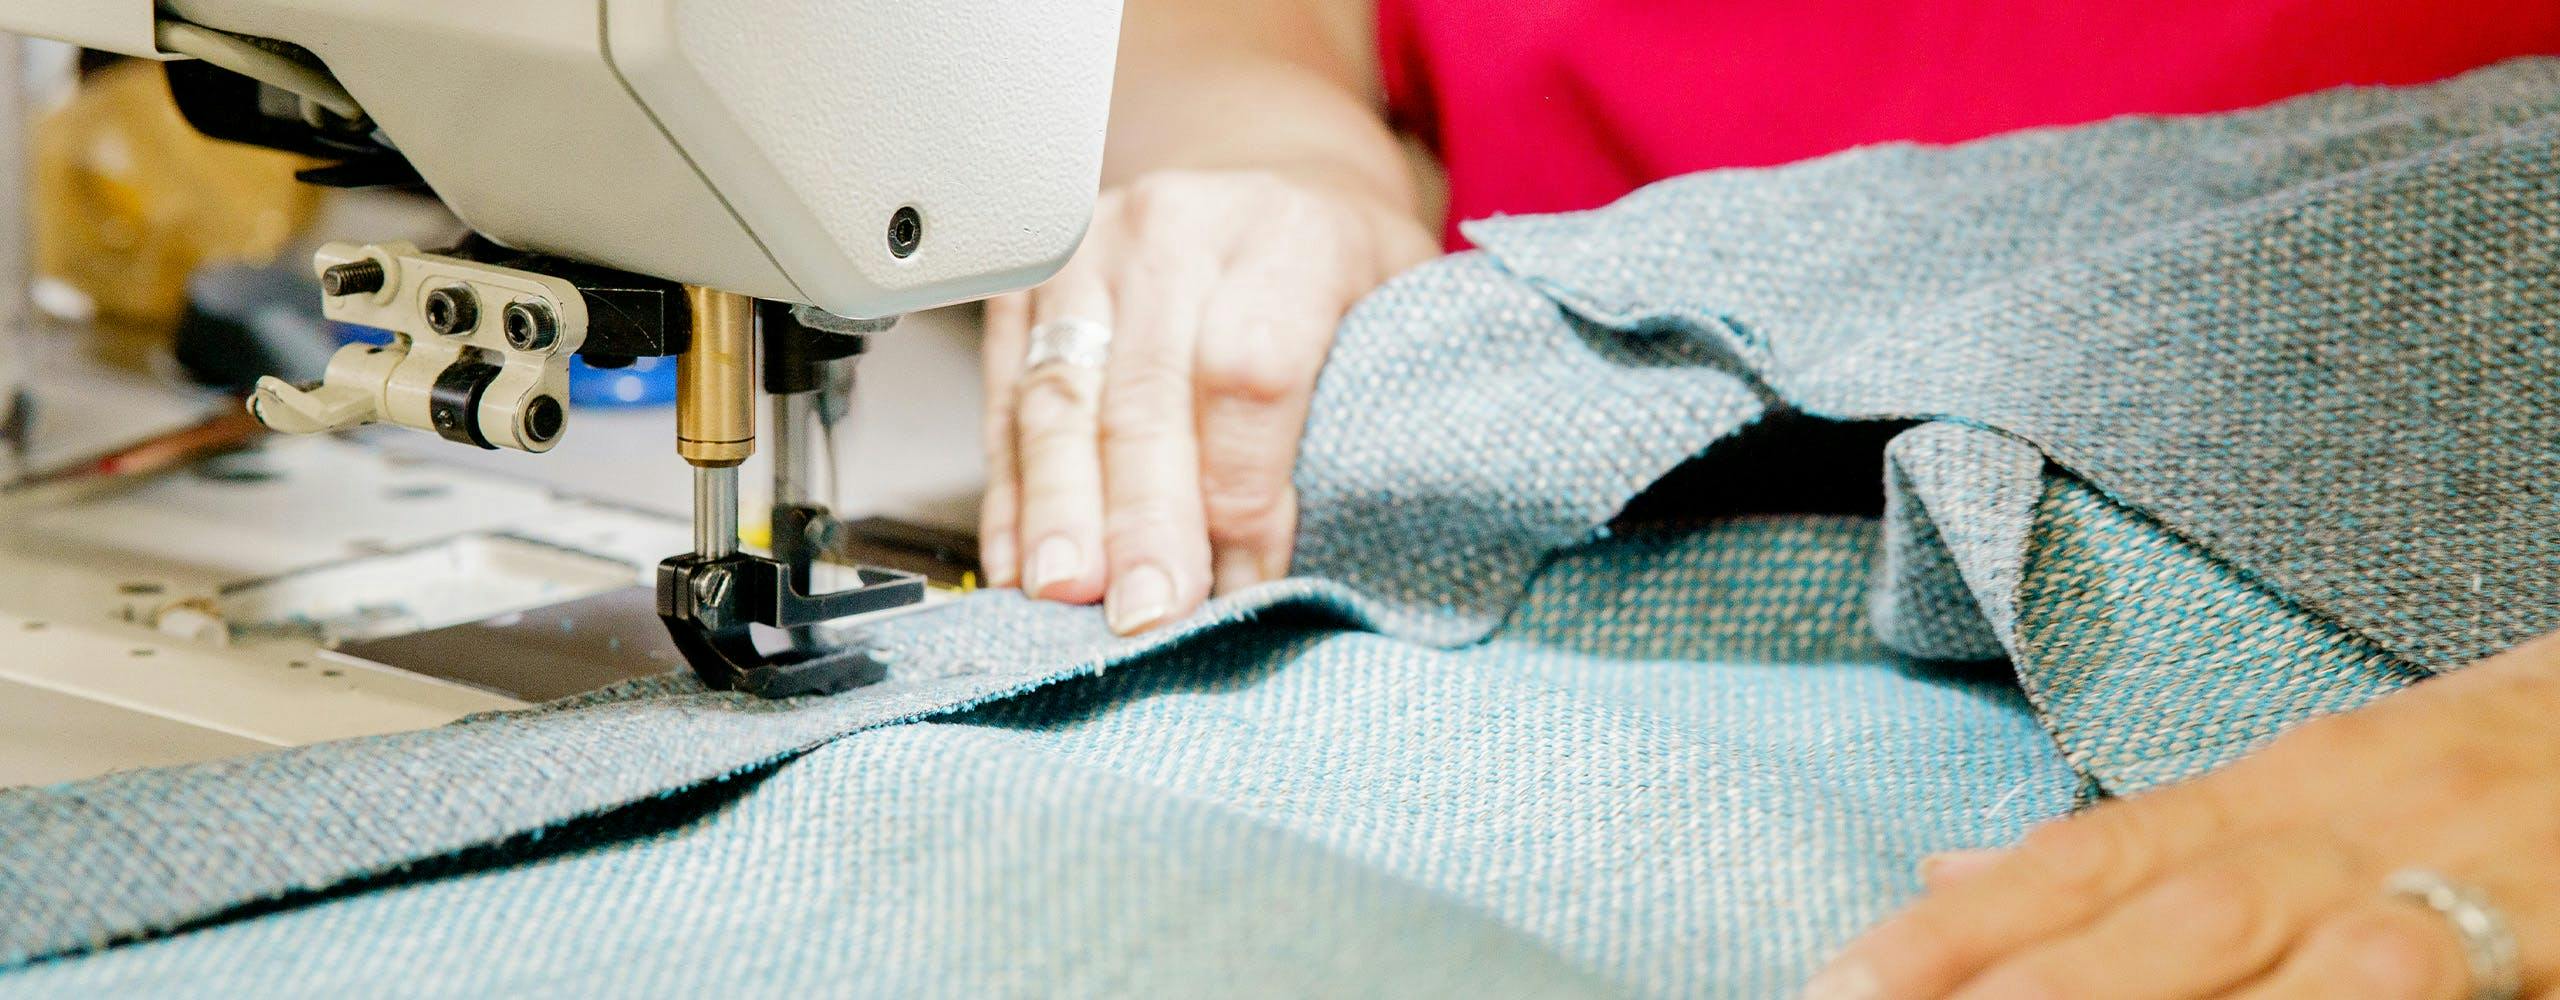 Charter artisan furniture maker sewing fabric